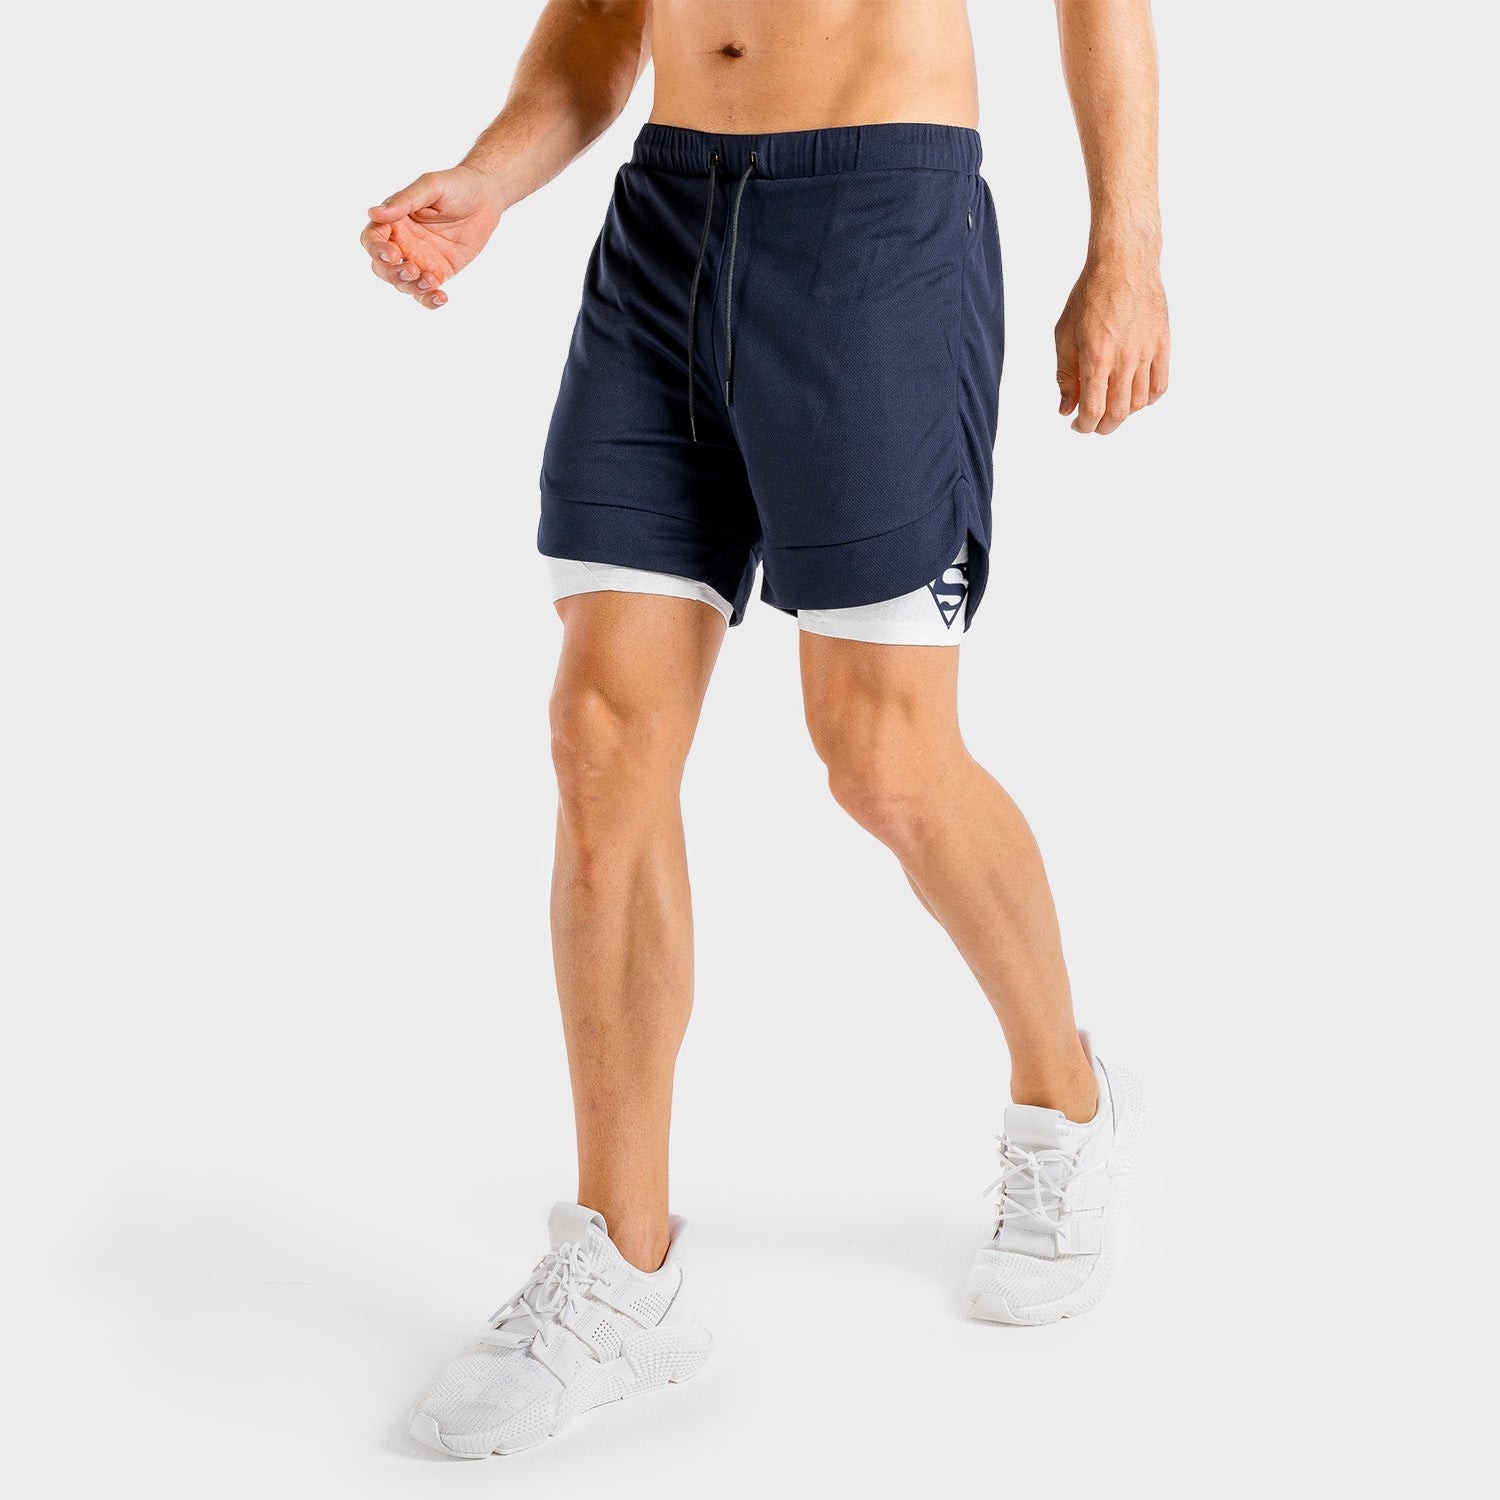 squatwolf-workout-short-for-men-superman-gym-shorts-blue-gym-wear